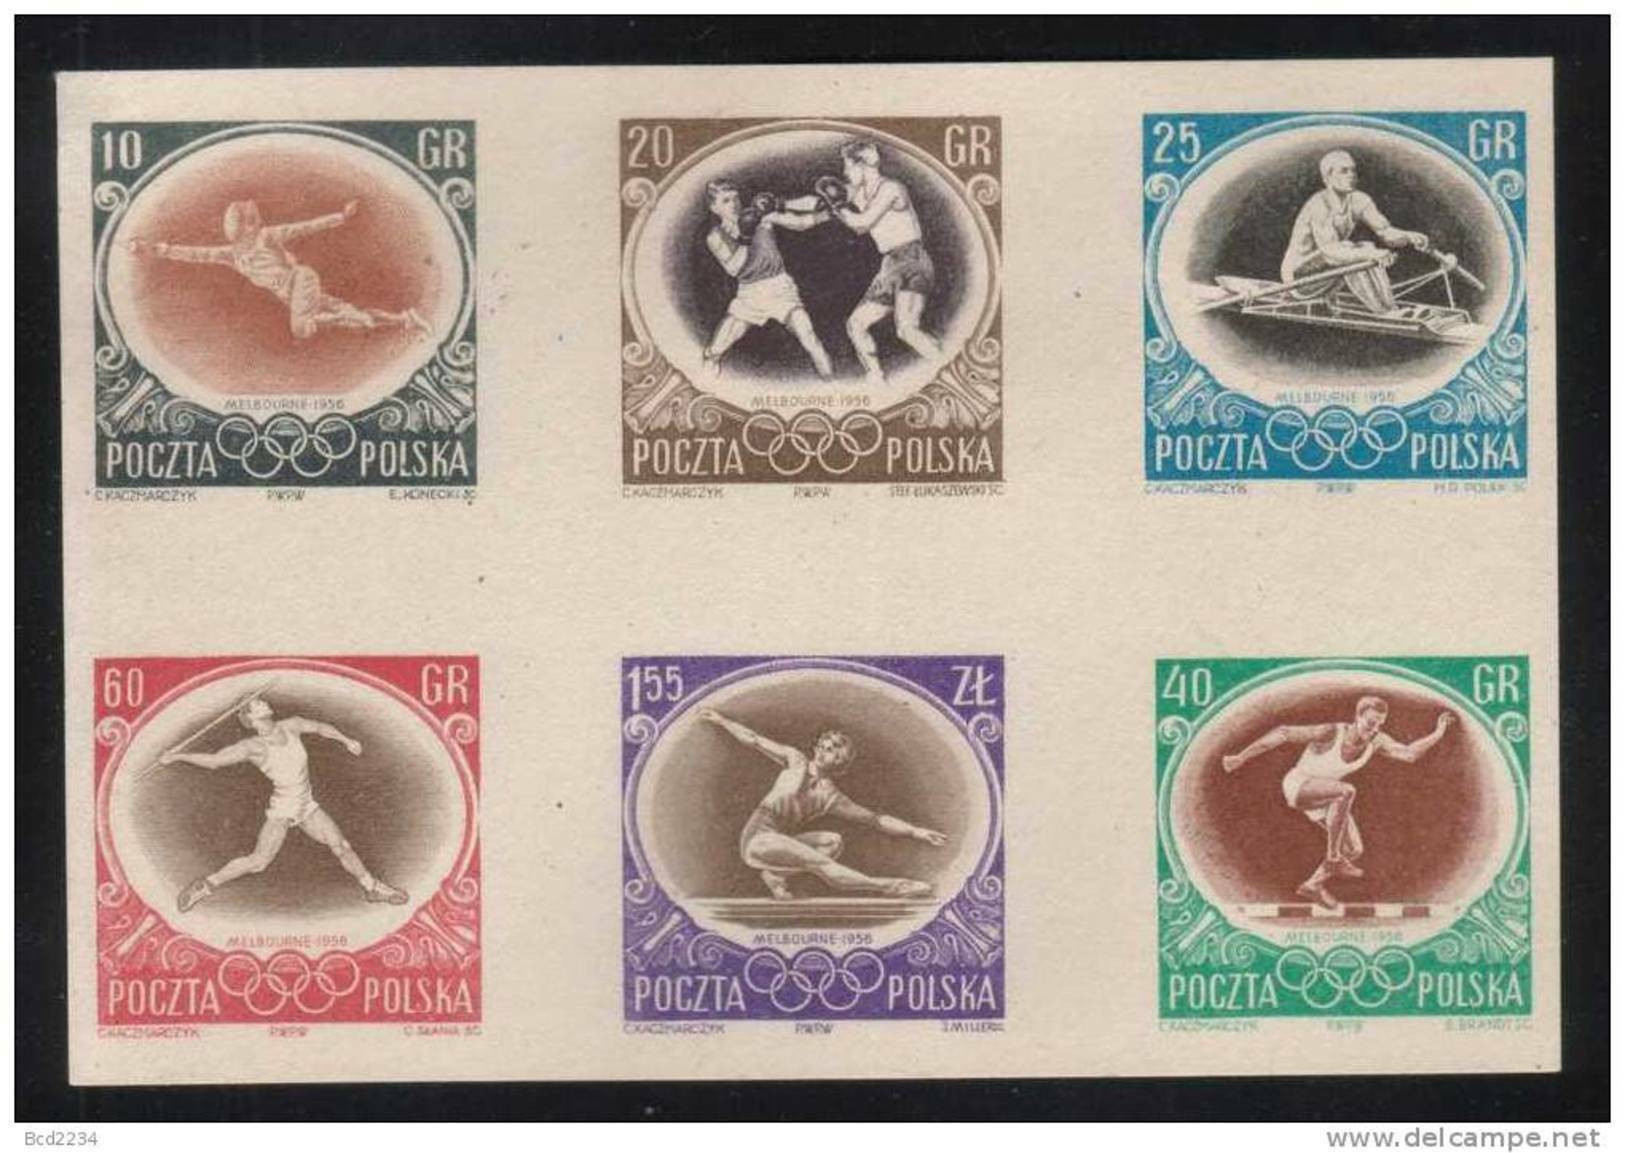 POLAND 1956 RARE SLANIA AUSTRALIA OLYMPICS COLOUR PROOF (NO GUM) SPORTS BOXING ROWING FENCING JAVELIN HURDLES - Proofs & Reprints